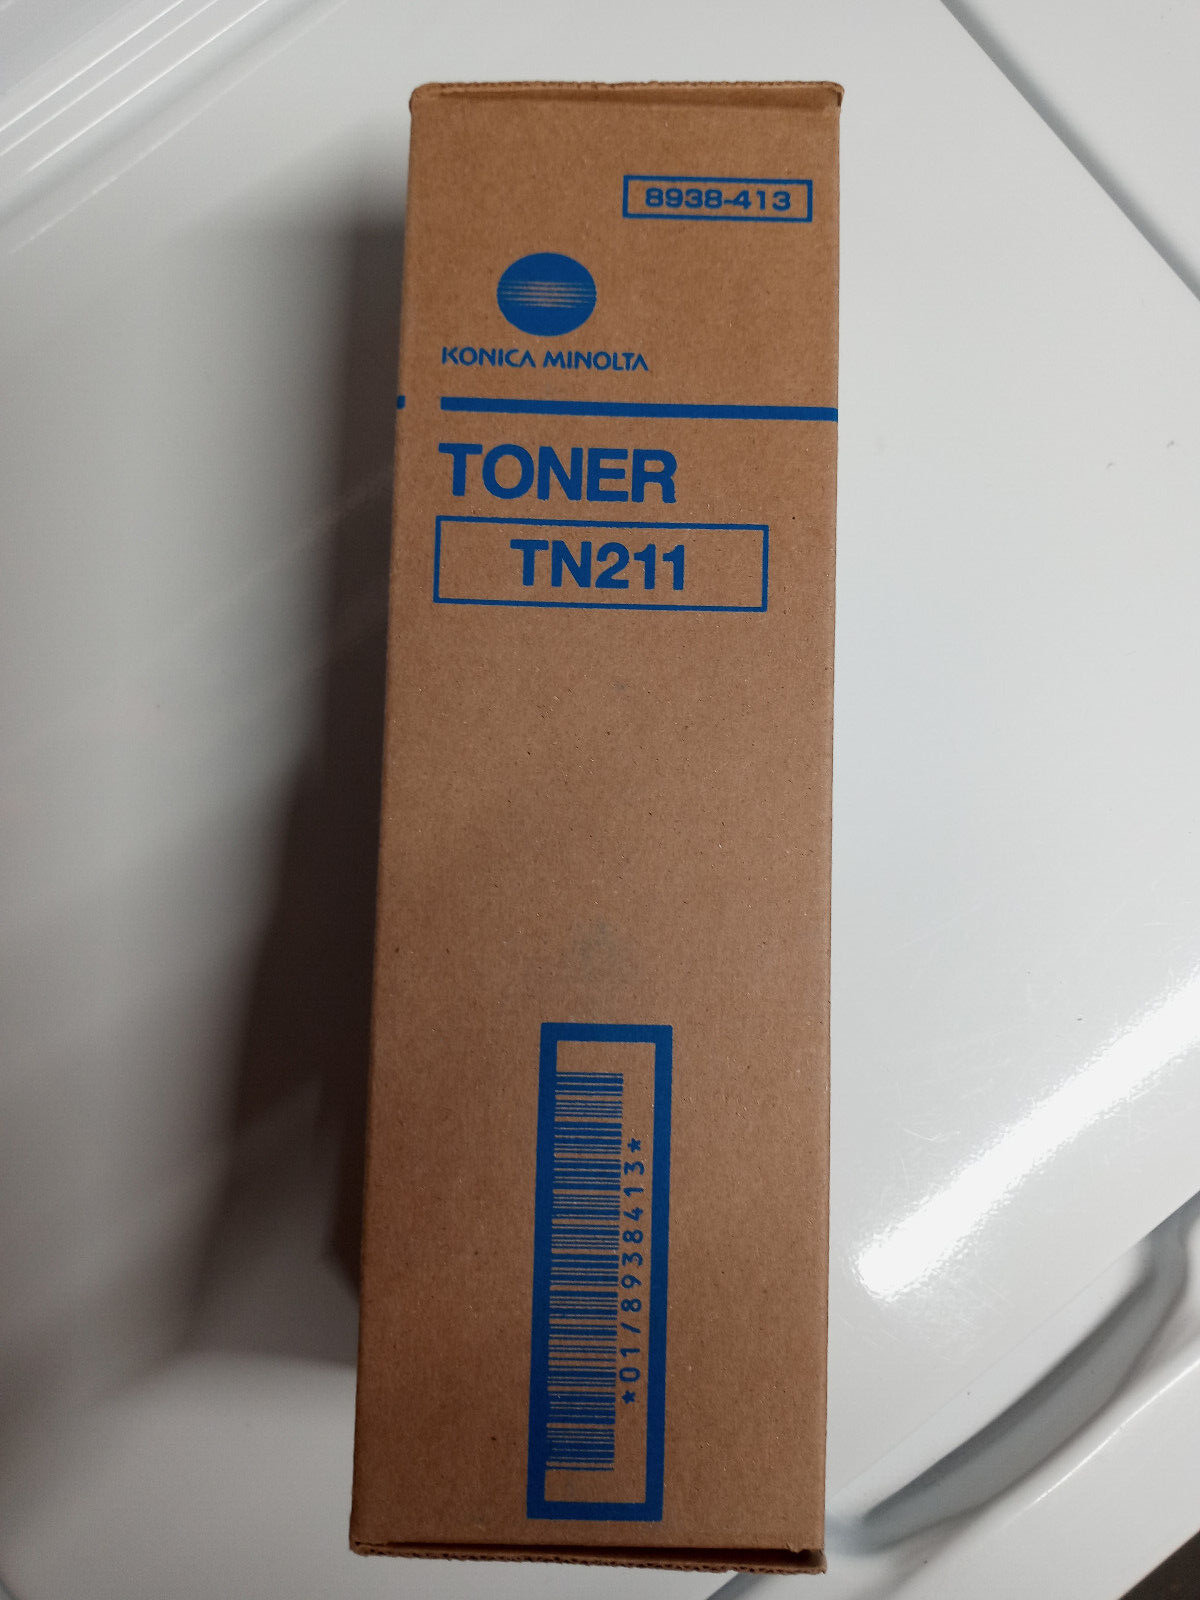 Genuine OEM Konica Minolta TN211 Black Toner Cartridge 8938413 New Sealed